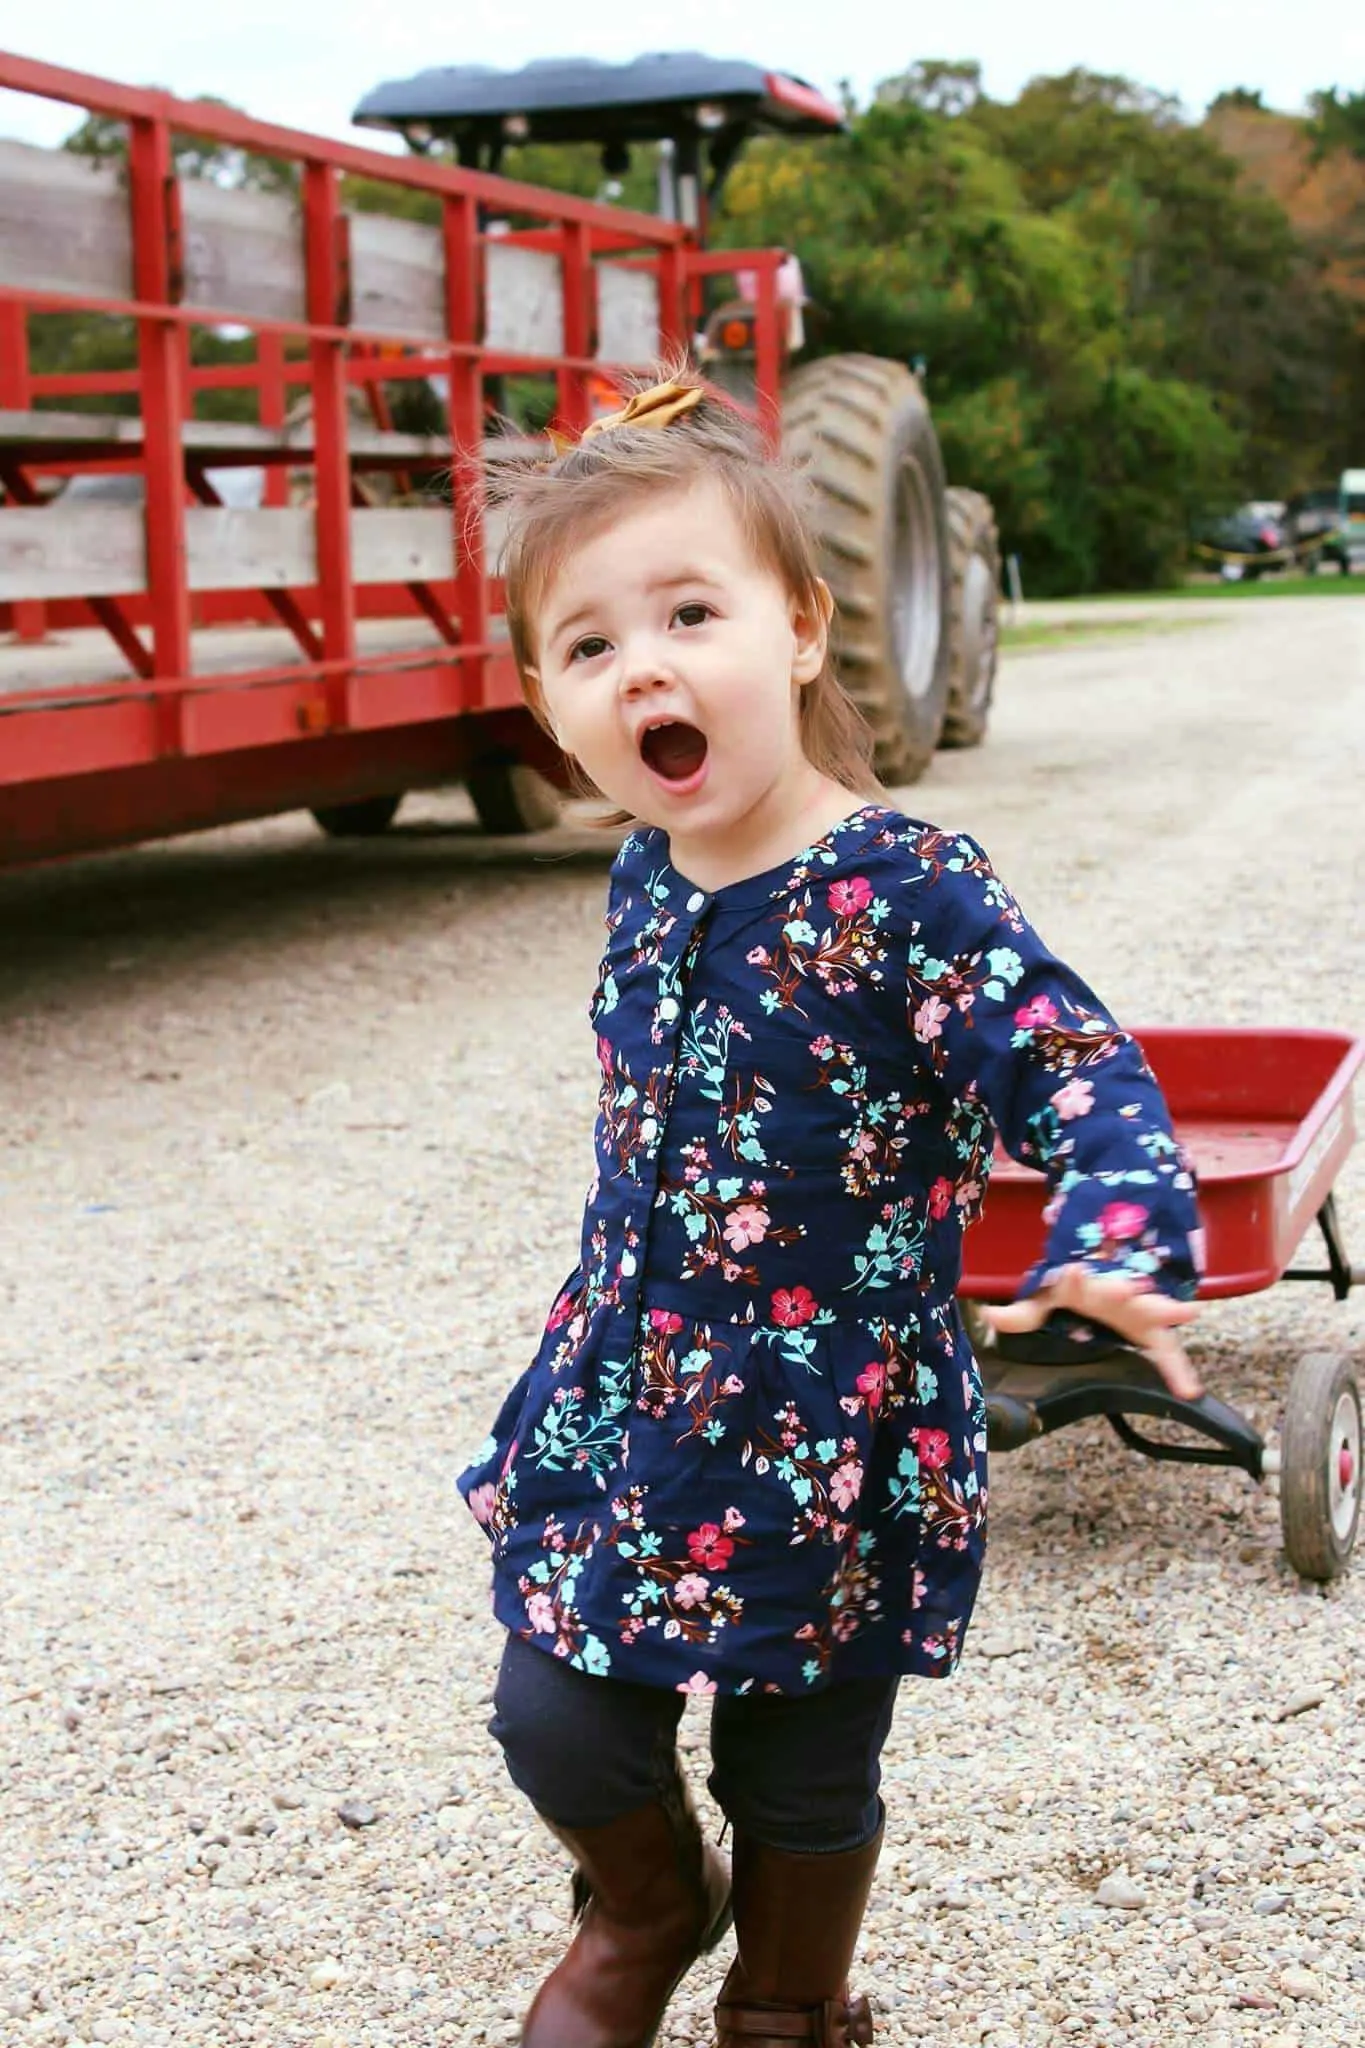 Toddler girl pulls wagon down dirt road.